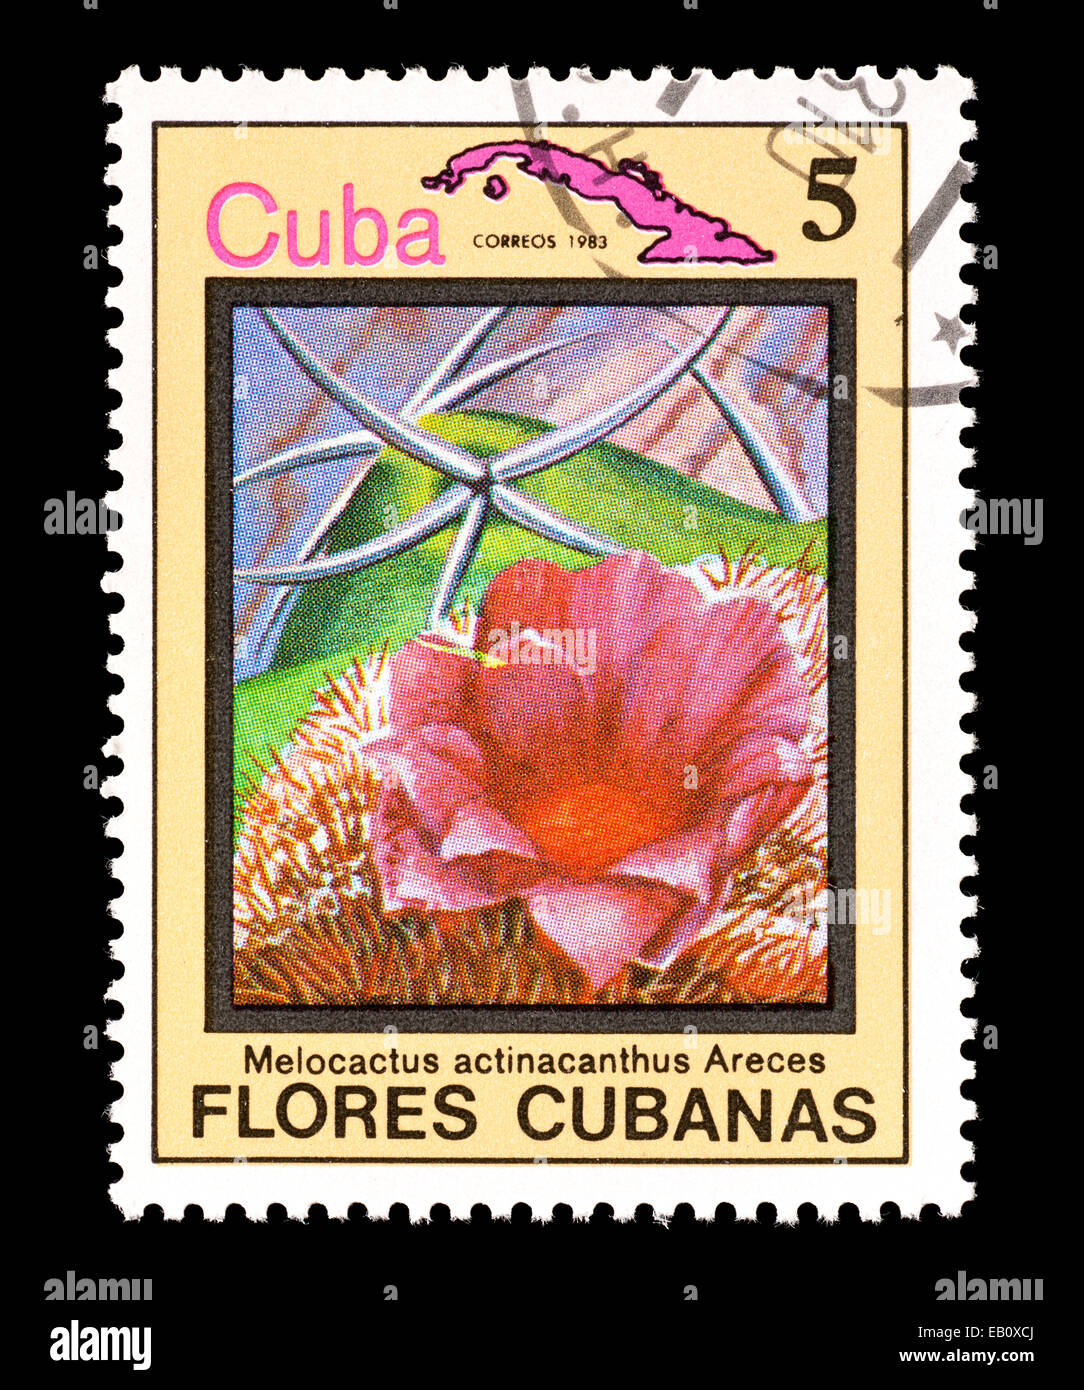 Postage stamp from Cuba depicting a Dwarf Turk's-cap cactus (Melocactus actinacanthus) Stock Photo